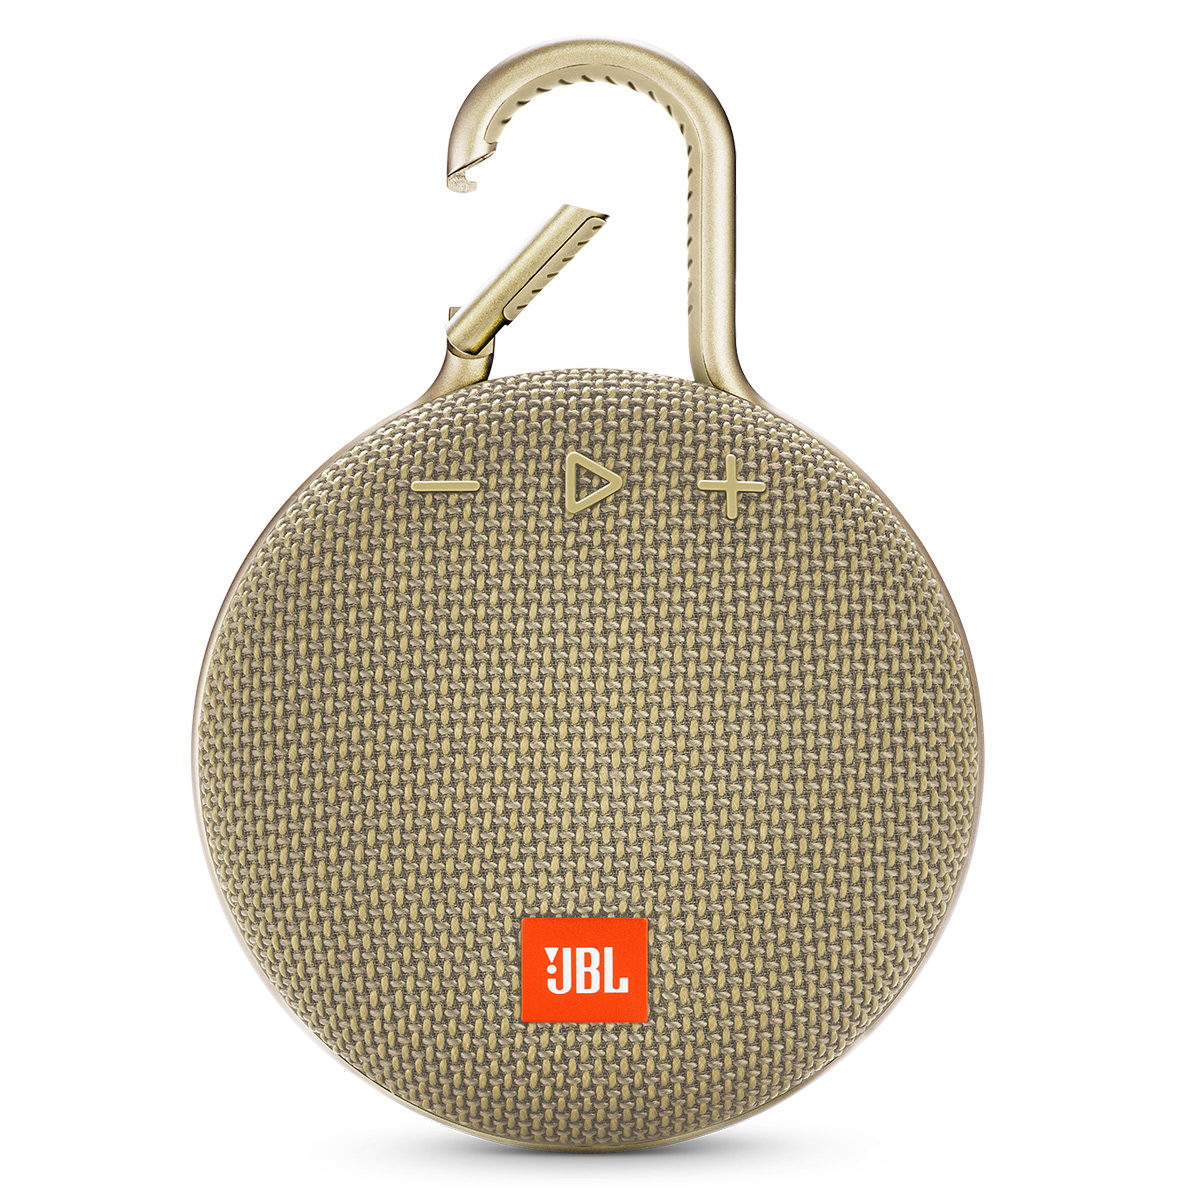 JBL Clip 3 Portable Bluetooth Waterproof Speaker - Sand - image 5 of 5